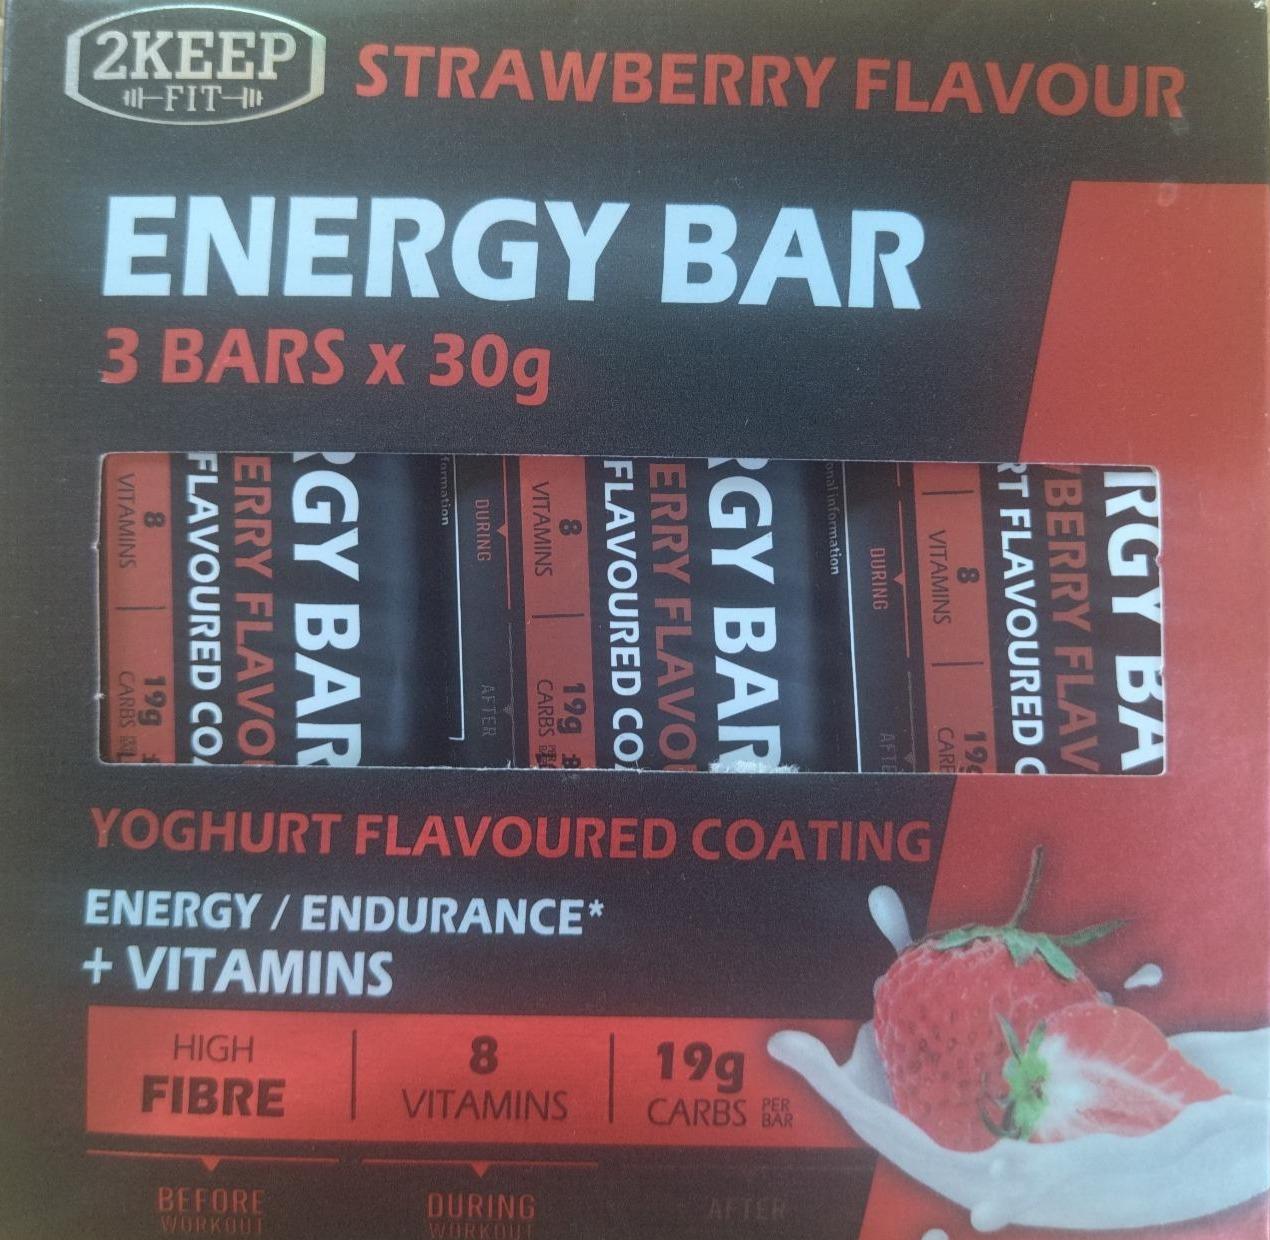 Фото - Energy bars yoghurt flavoured coating 2Keep Fit